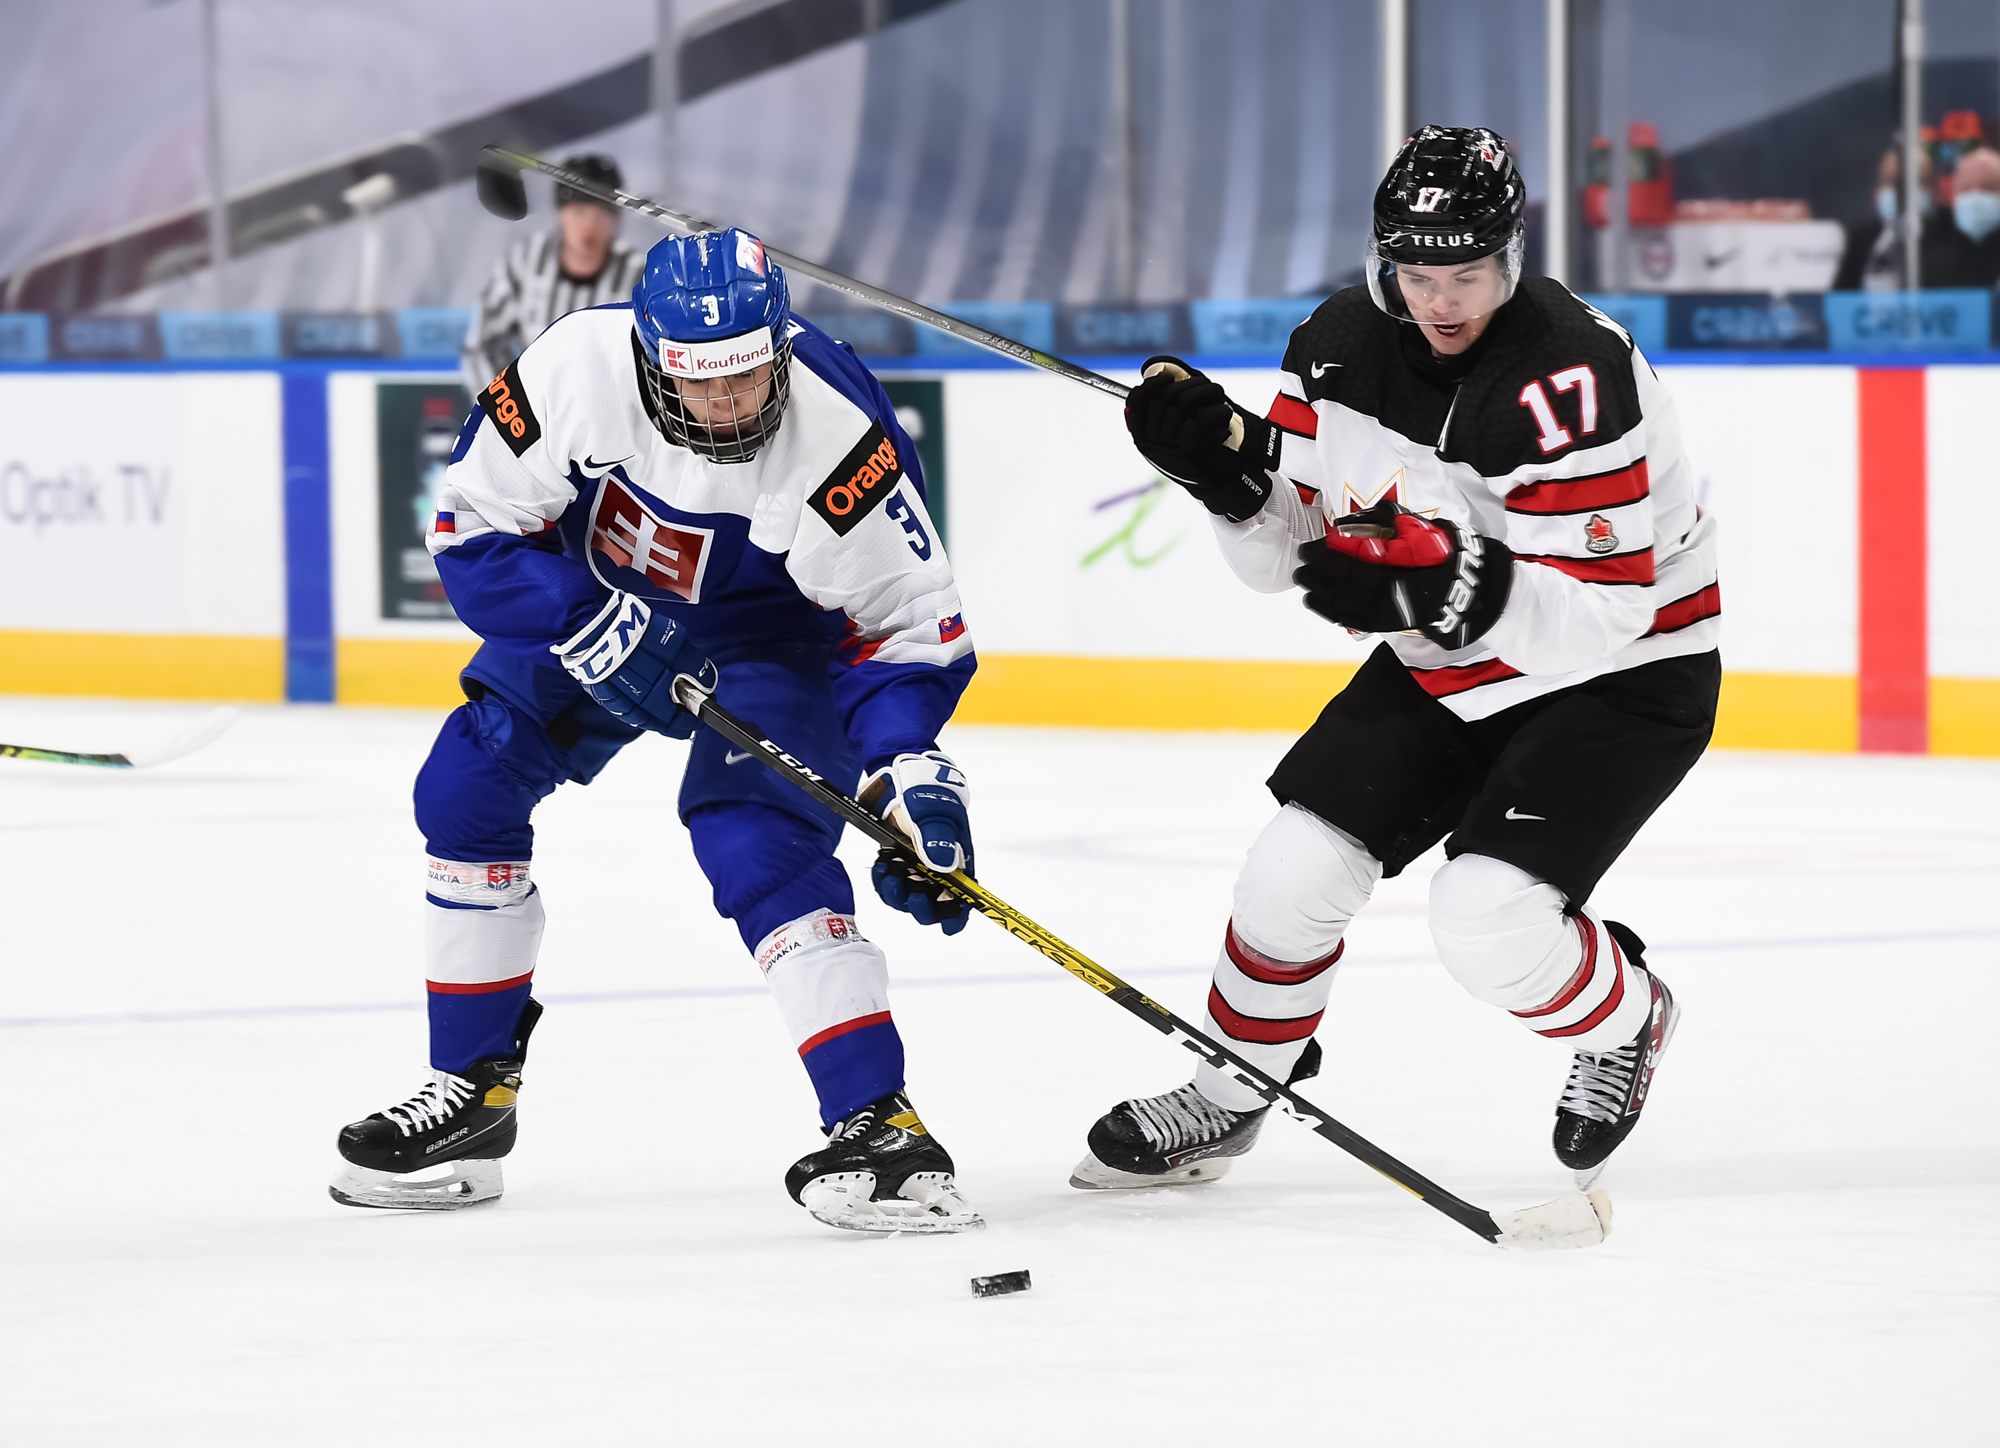 IIHF - Gallery: Slovakia vs Canada - 2021 IIHF World Junior Championship